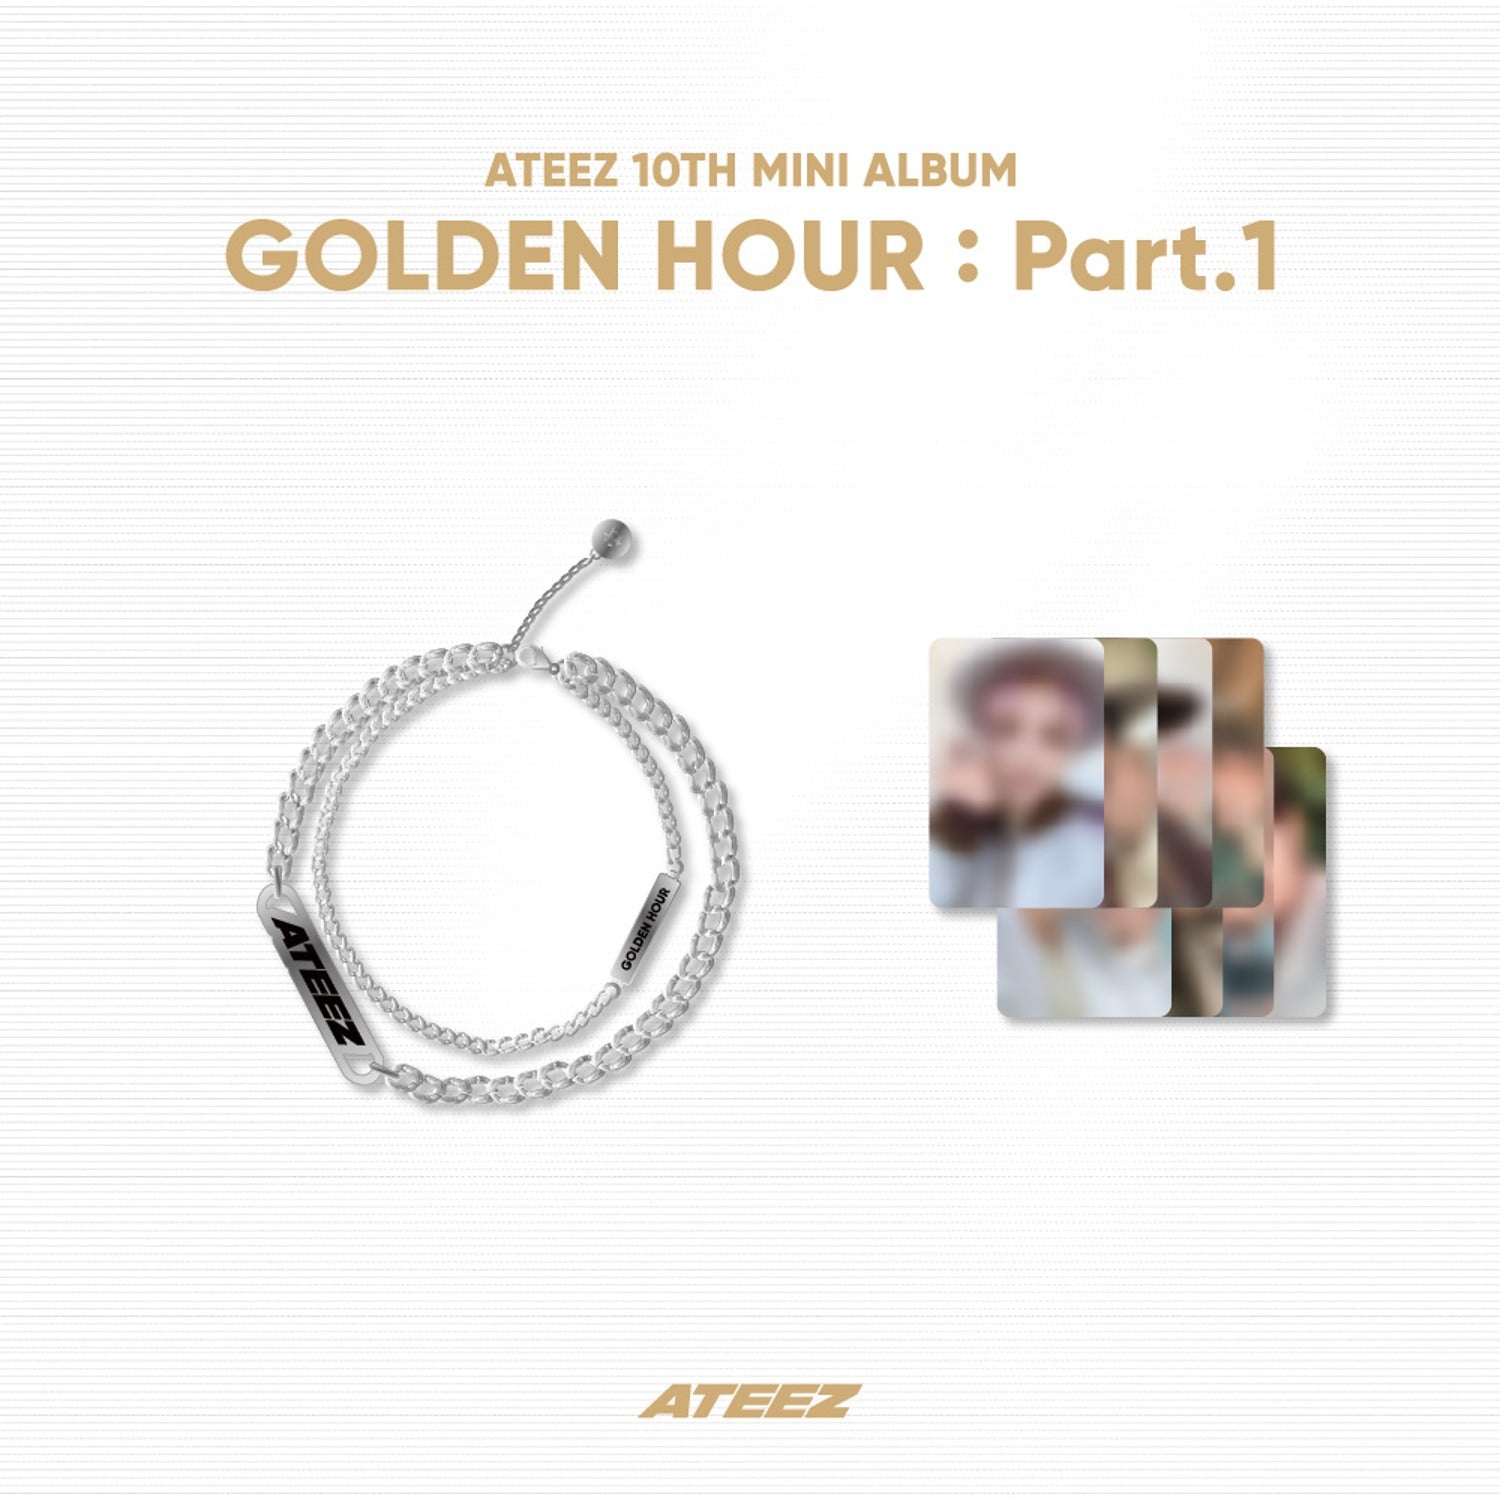 ATEEZ - GOLDEN HOUR : PART.1 OFFICIAL MD WORK BRACELET - COKODIVE